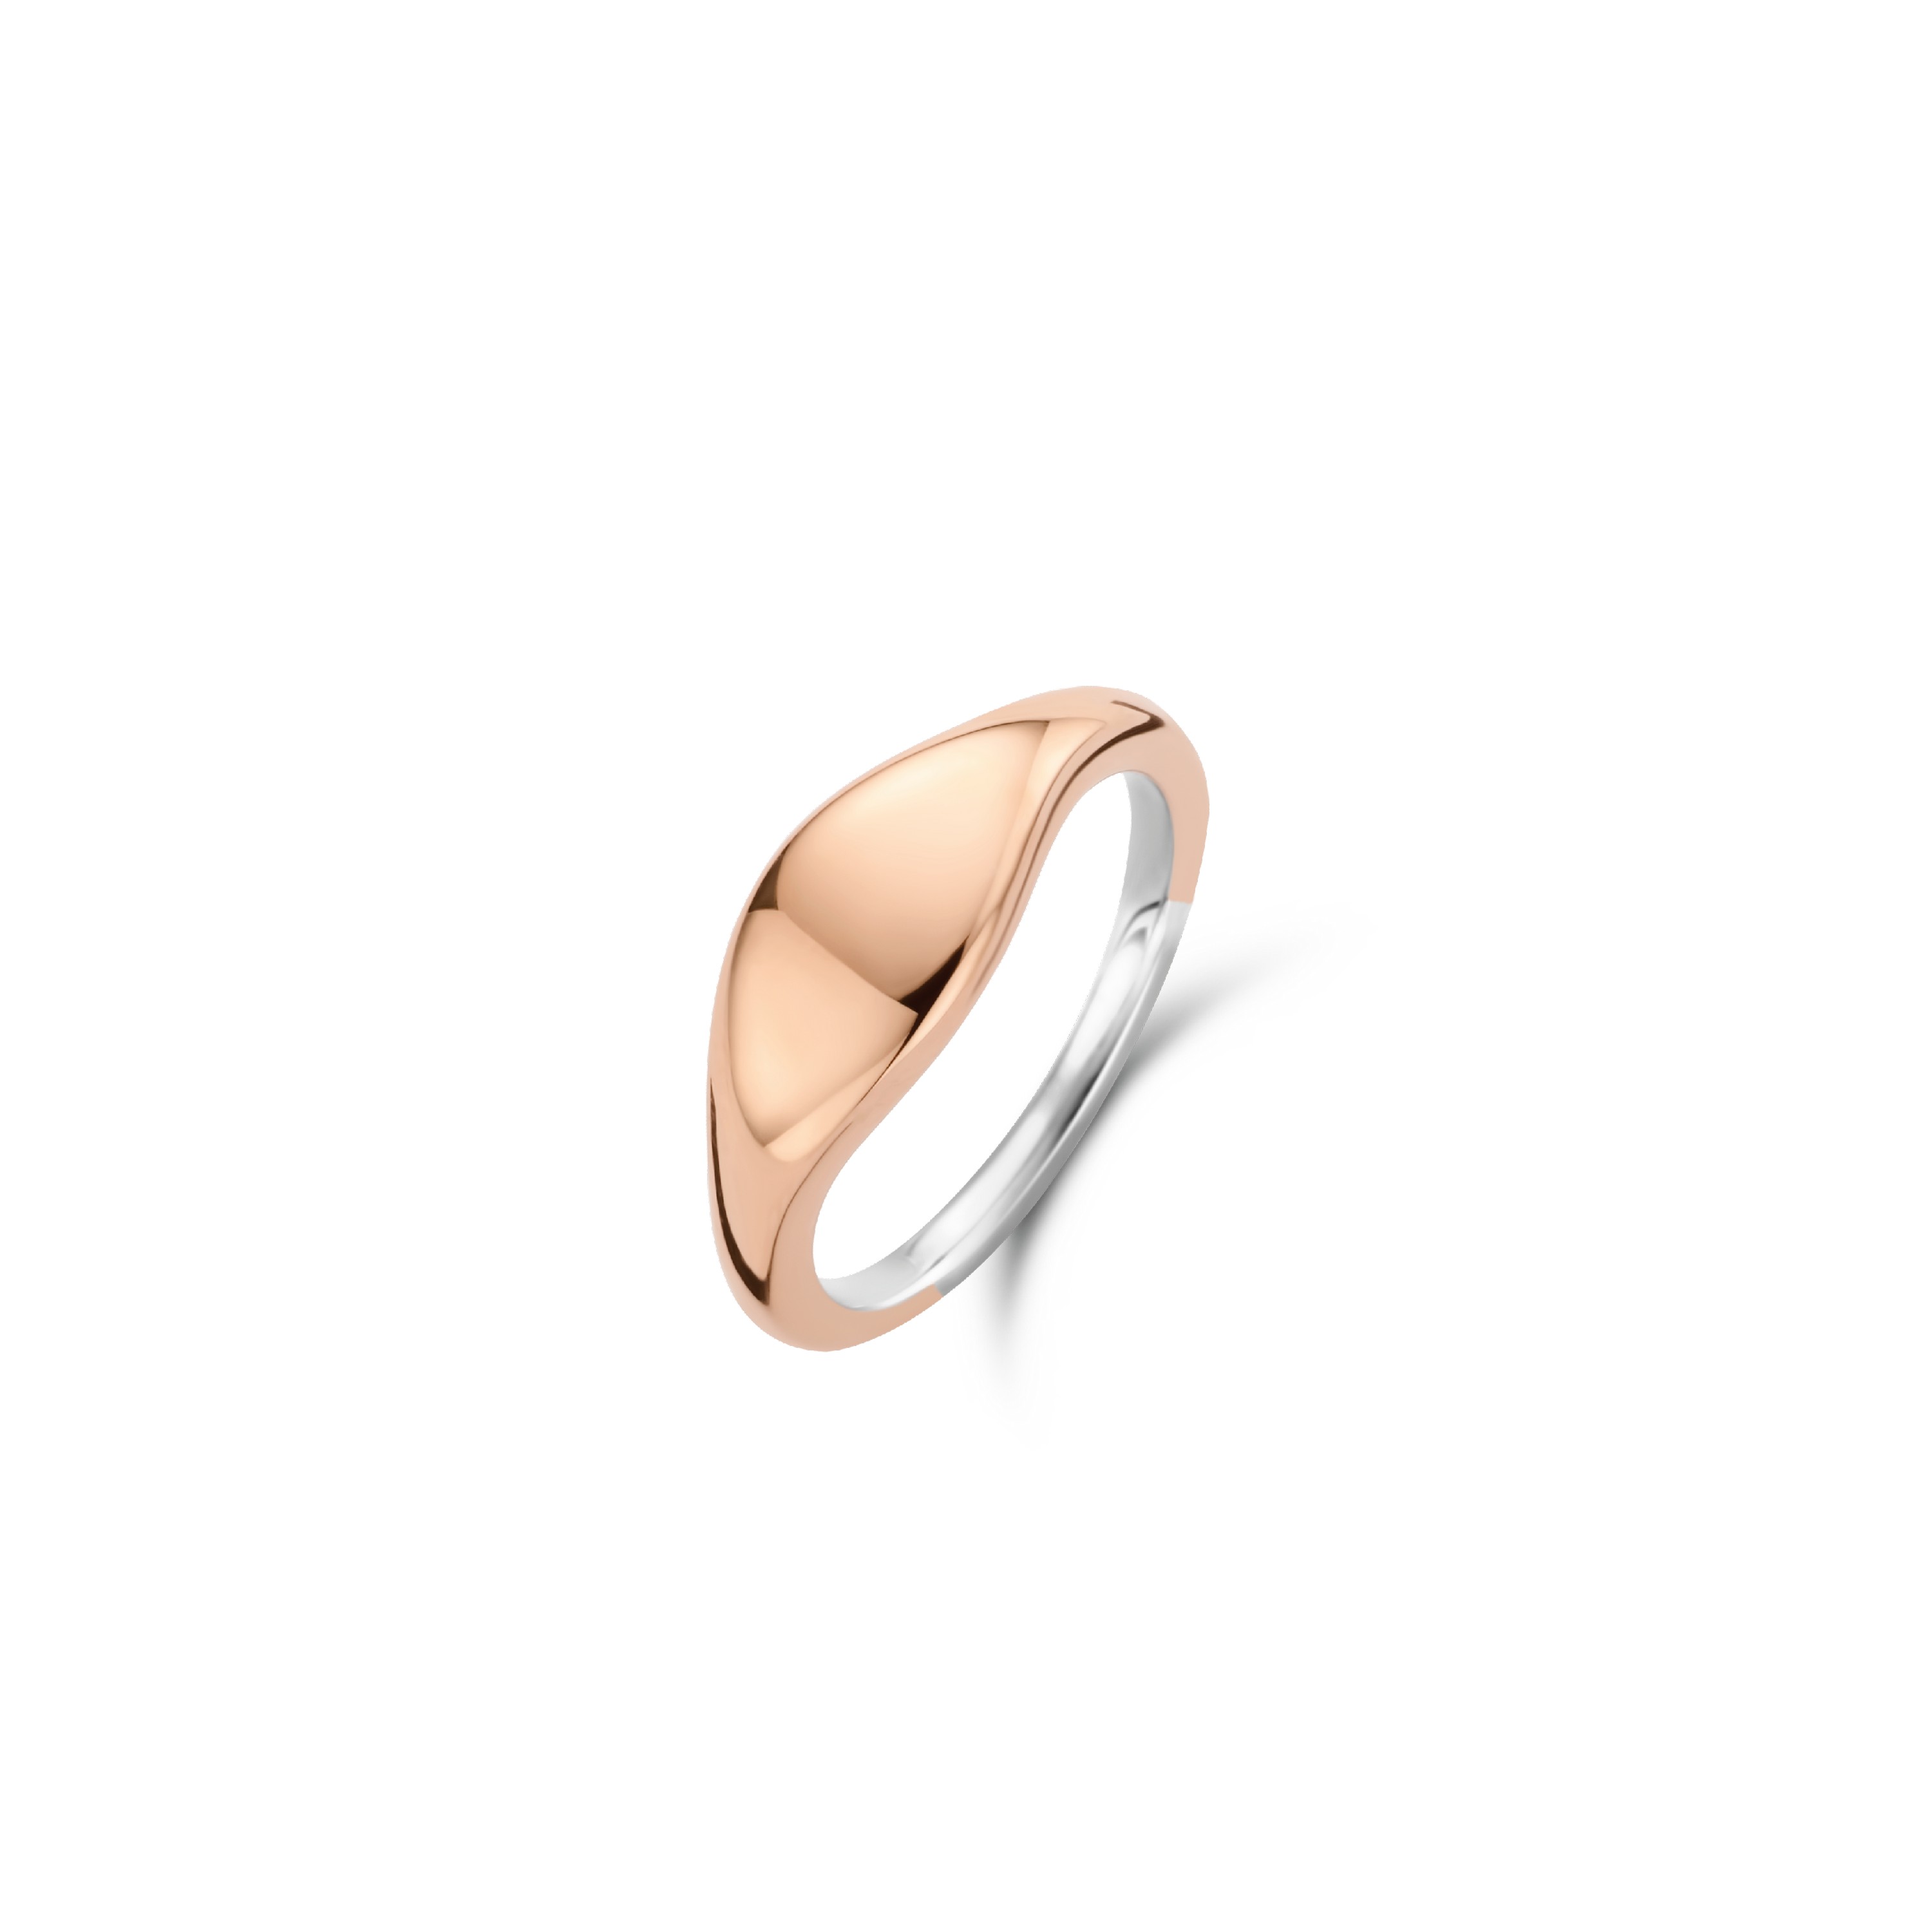 TI SENTO - Milano Ring 12223SR Gala Jewelers Inc. White Oak, PA